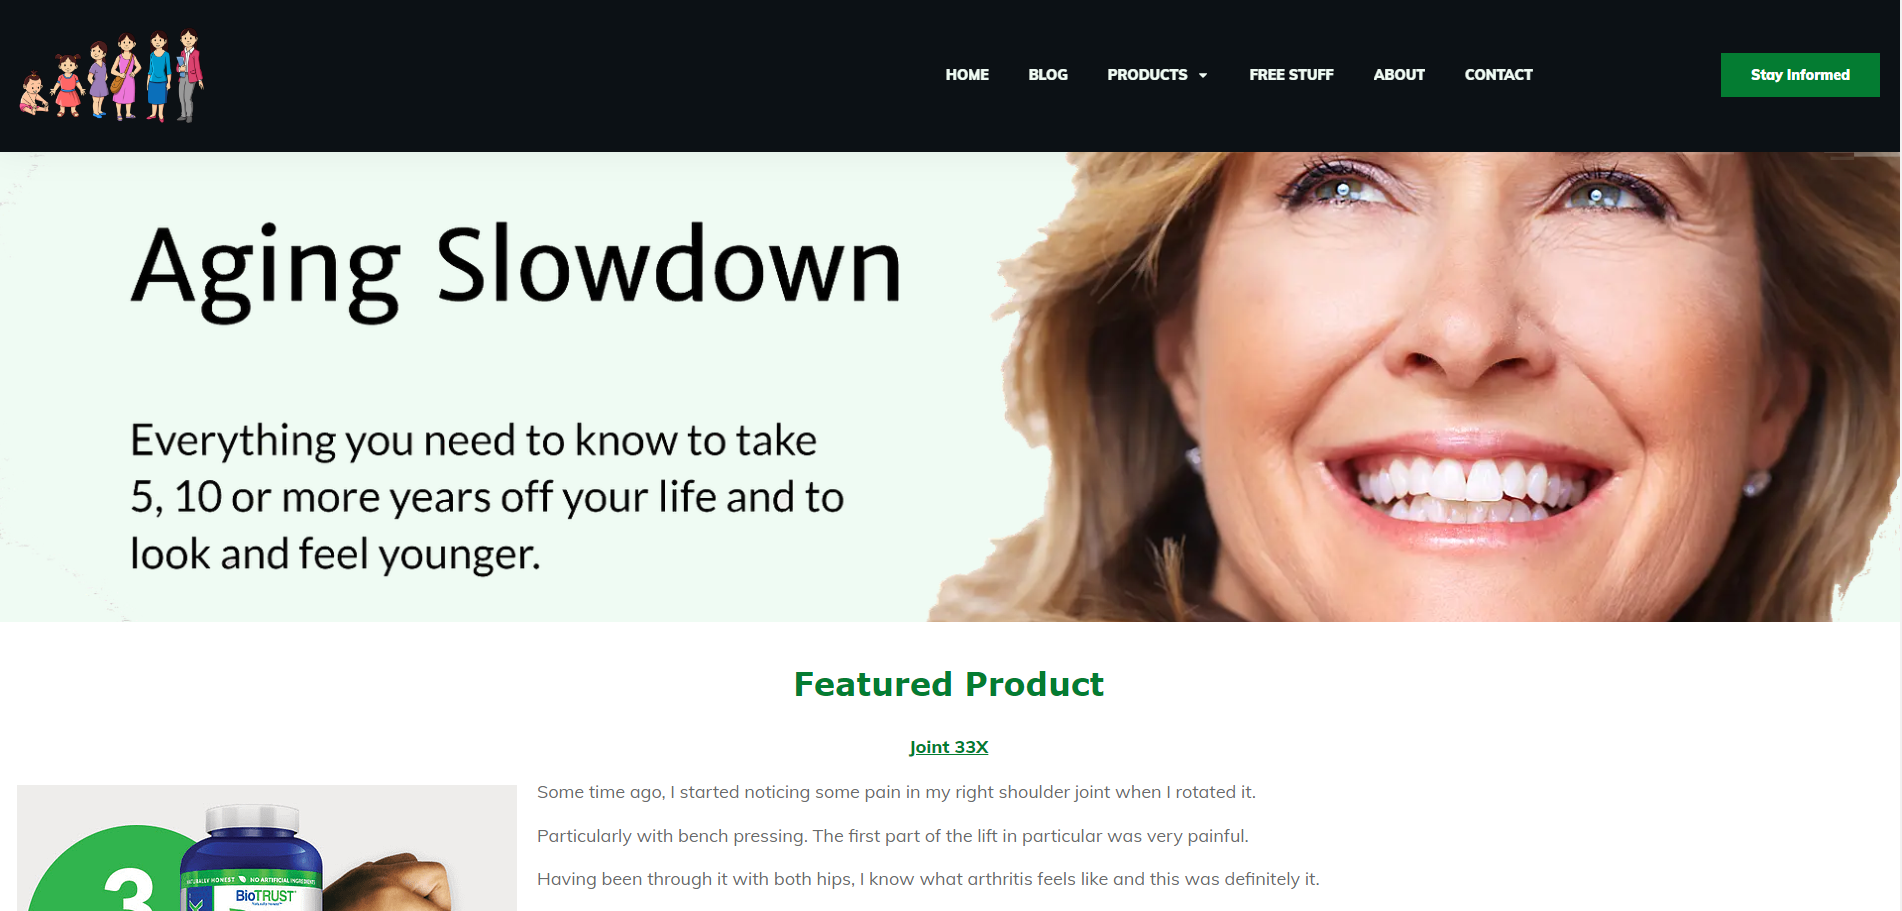 Affiliate Marketing Website Aging Slowdown